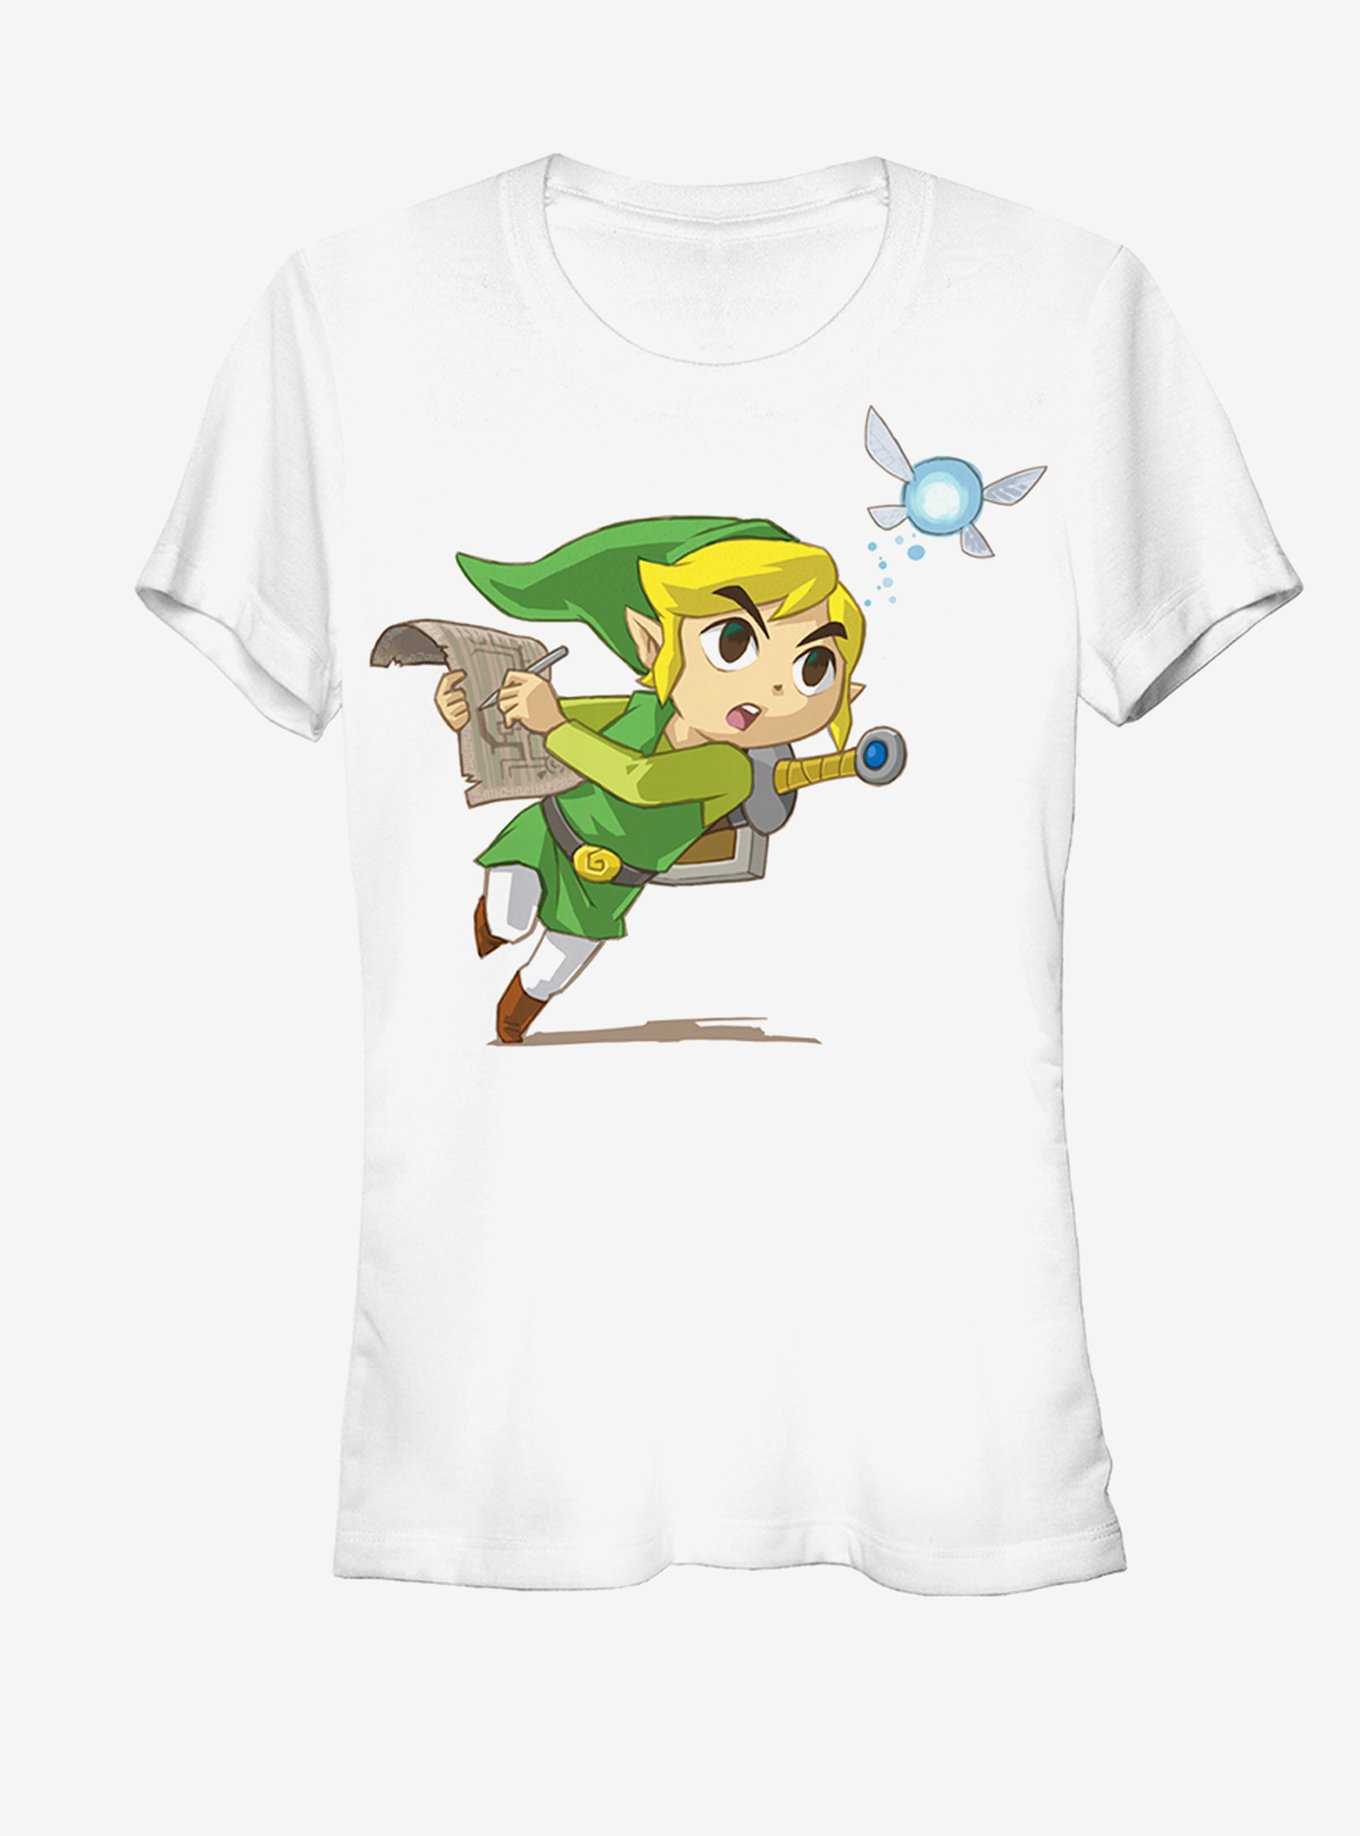 Nintendo Legend of Zelda Link and Navi Girls T-Shirt, , hi-res